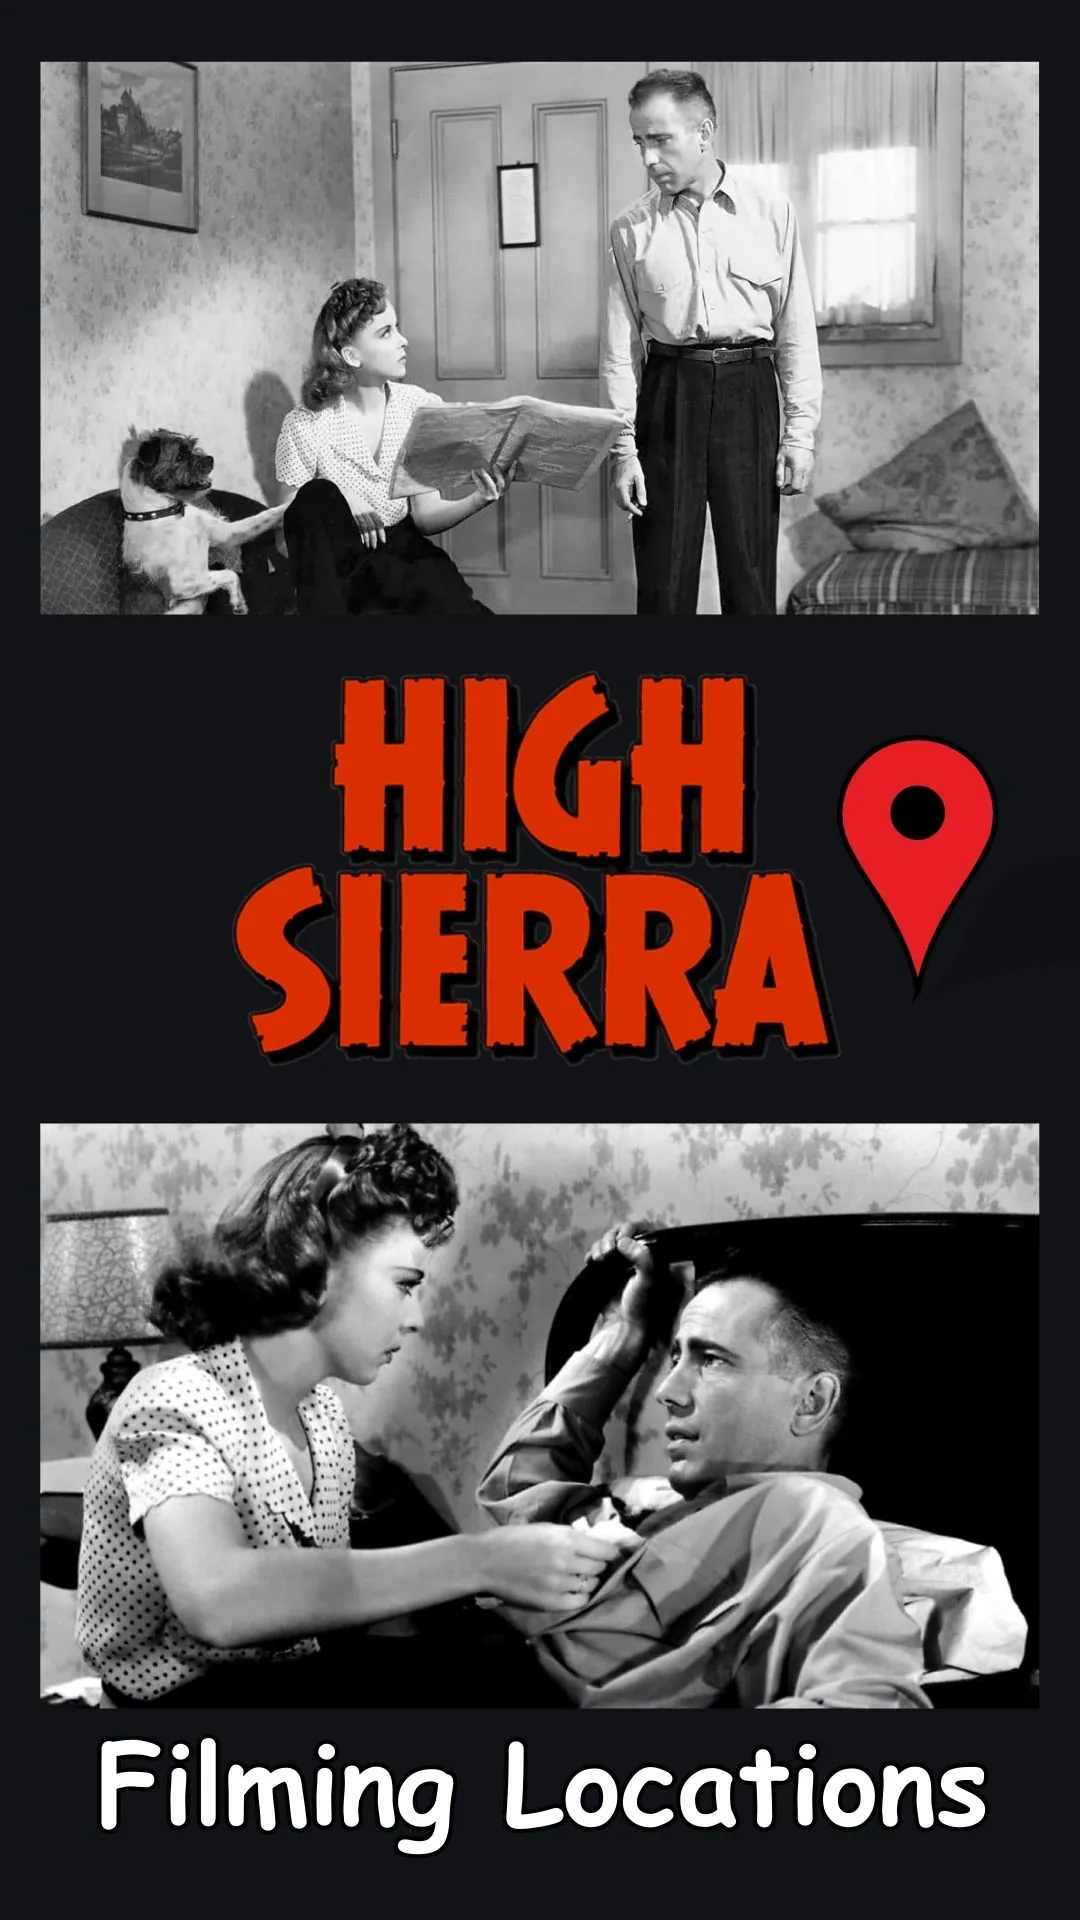 High Sierra Filming Location